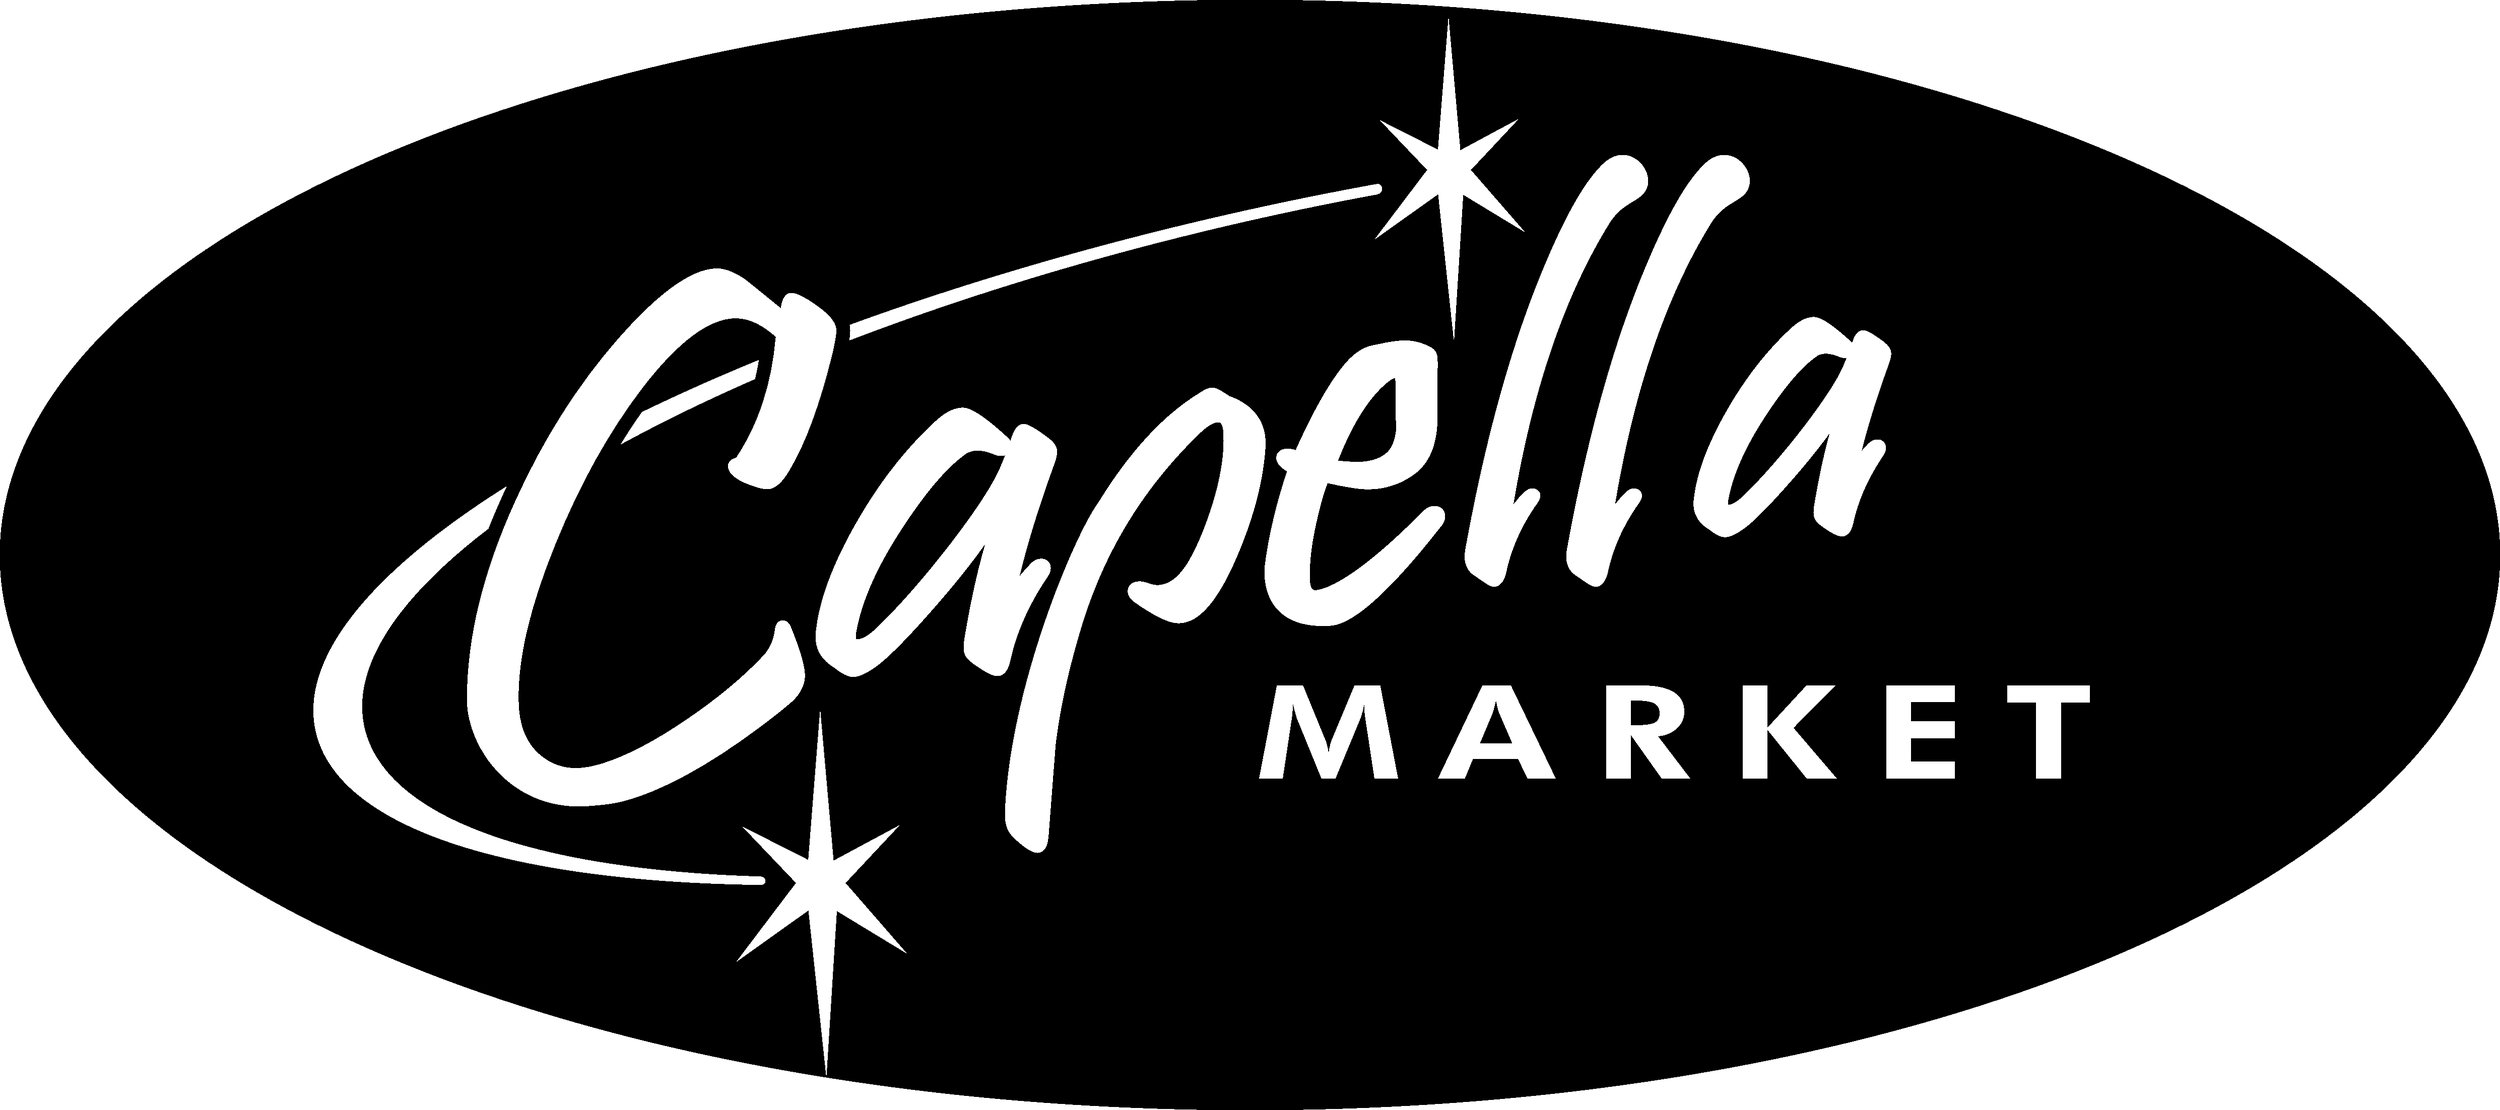 Image result for capella market